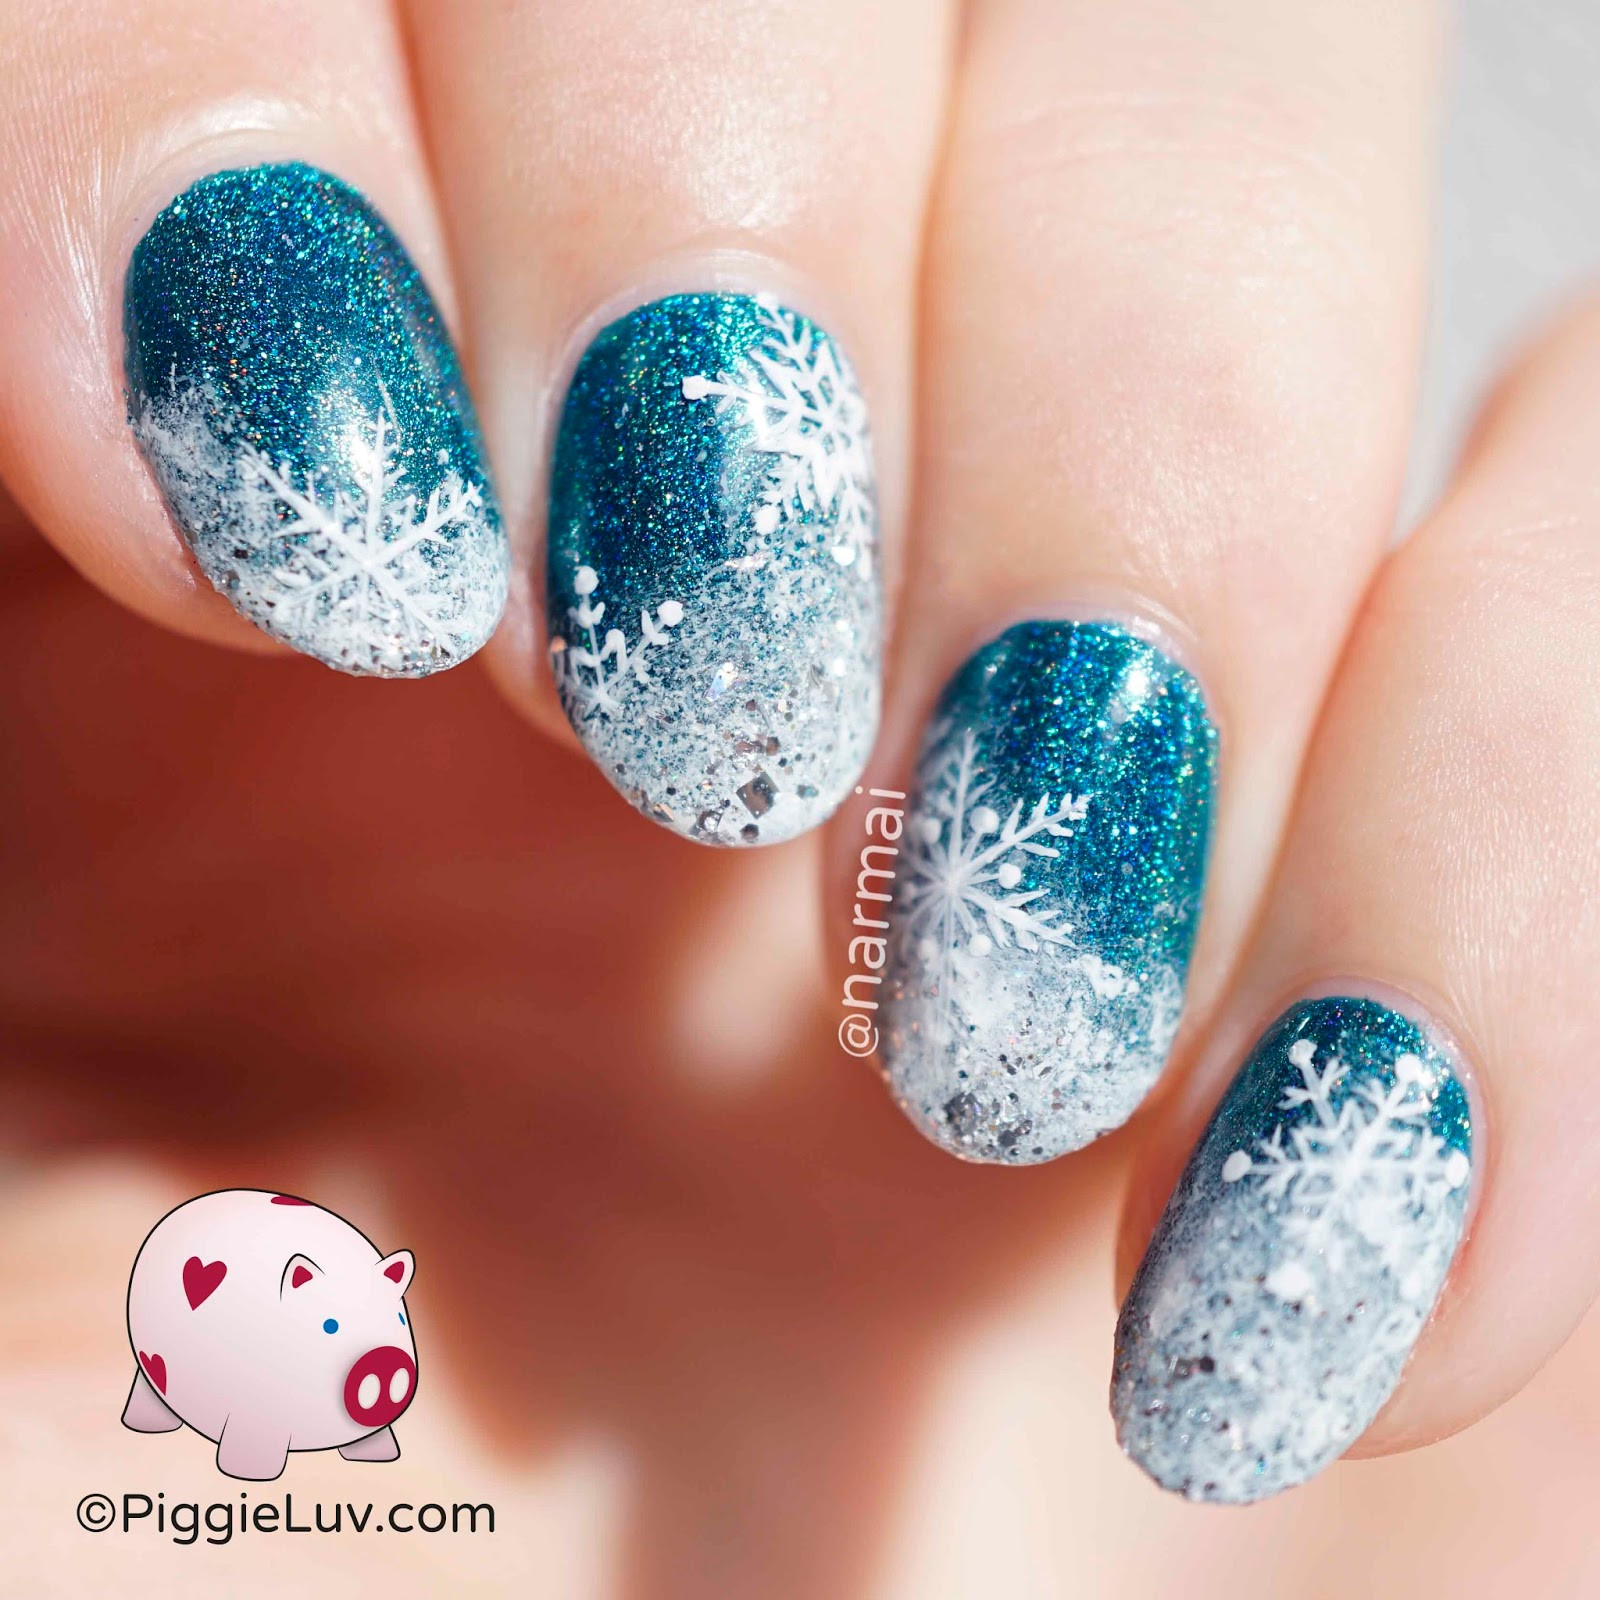 Snow Nail Designs
 PiggieLuv Flakage Snow nail art tutorial